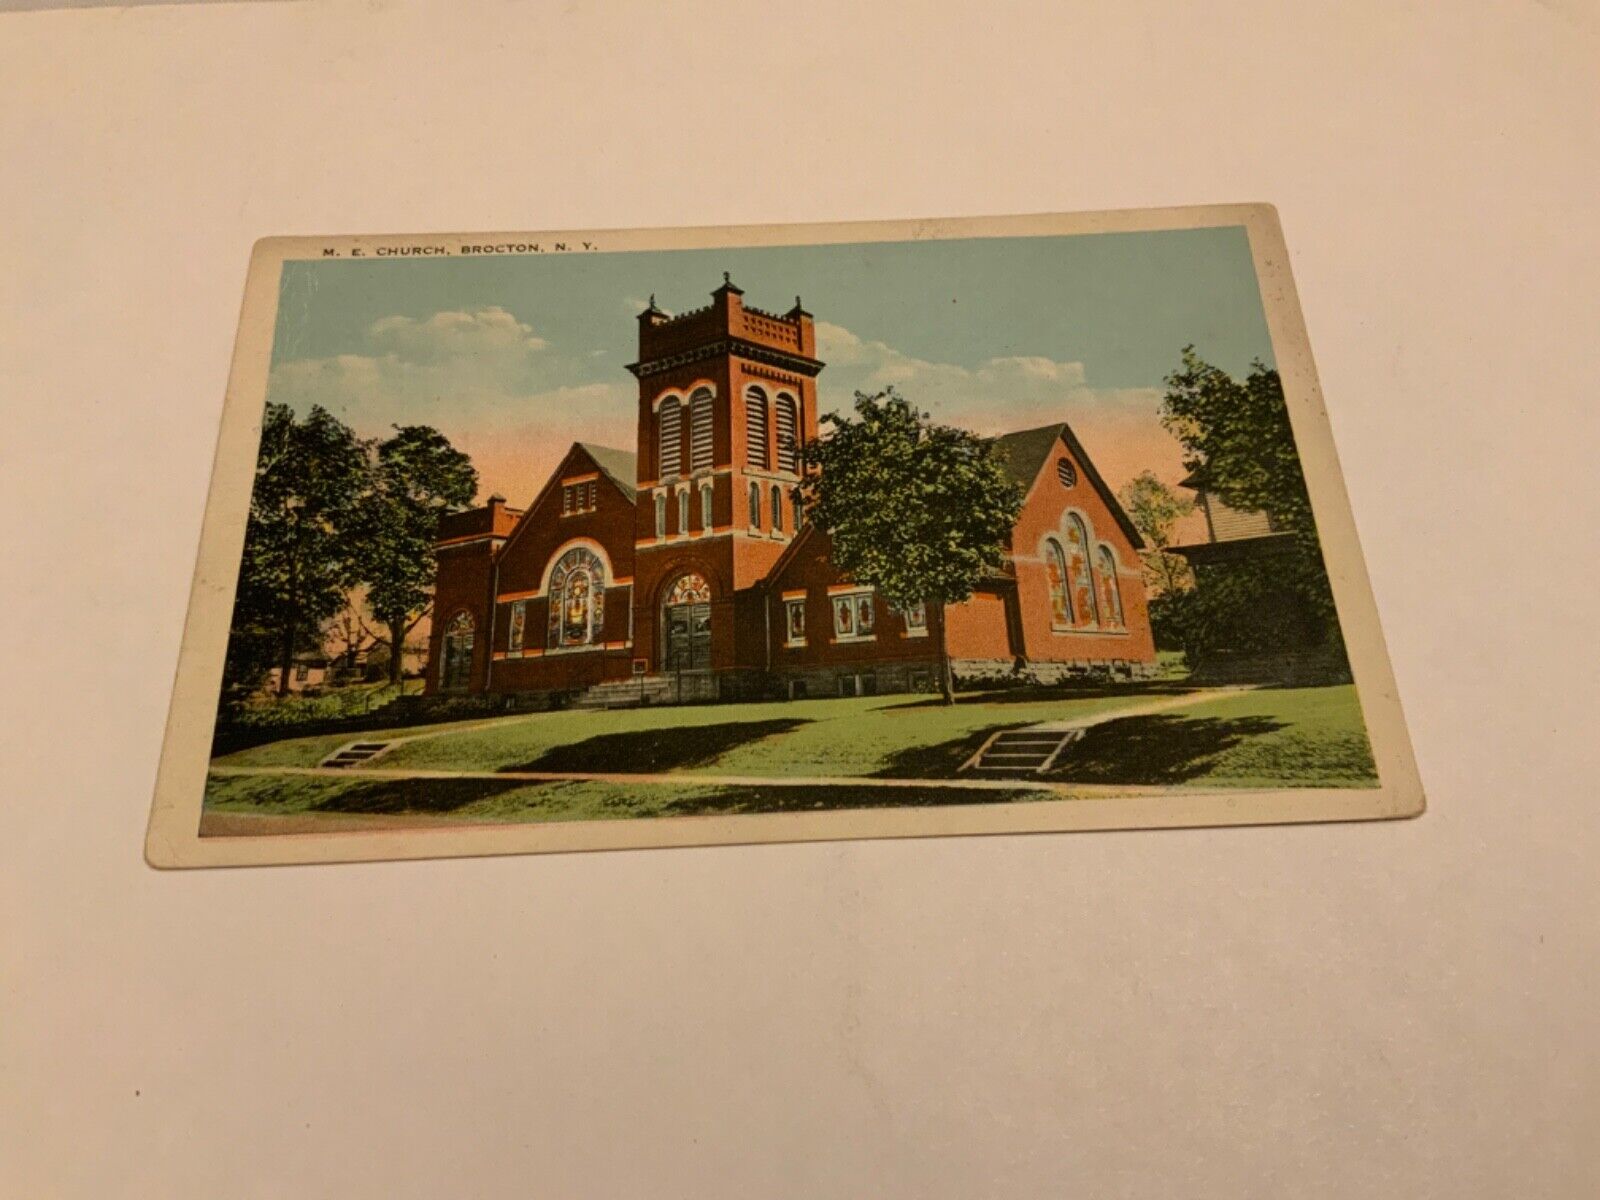 Brocton, N.Y. ~ M. E. Church - 1937 Vintage Postcard